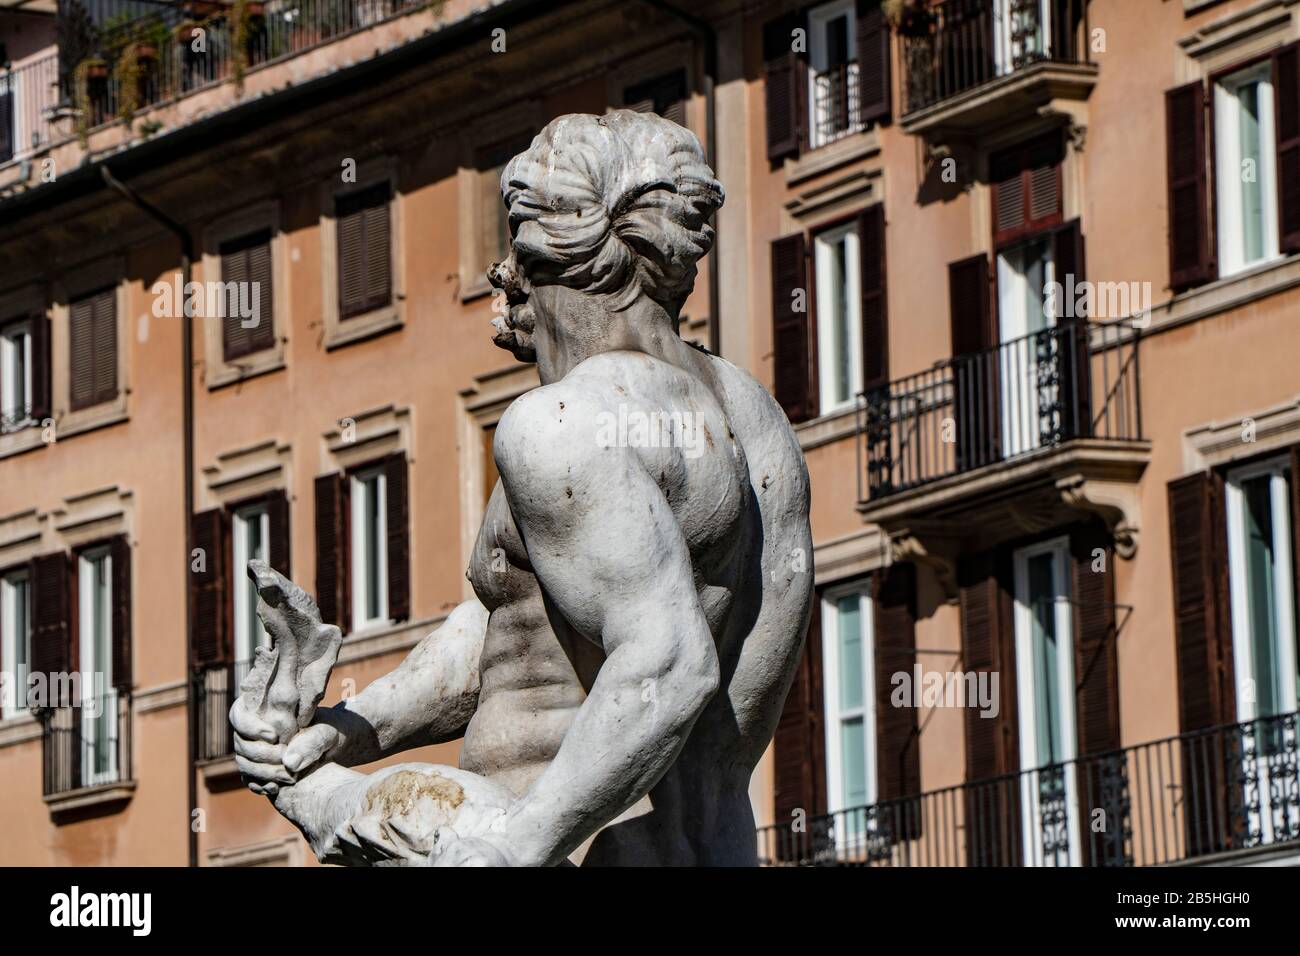 Architectural details of Fontana del Moro or Moro Fountain. Rome. Italy Stock Photo